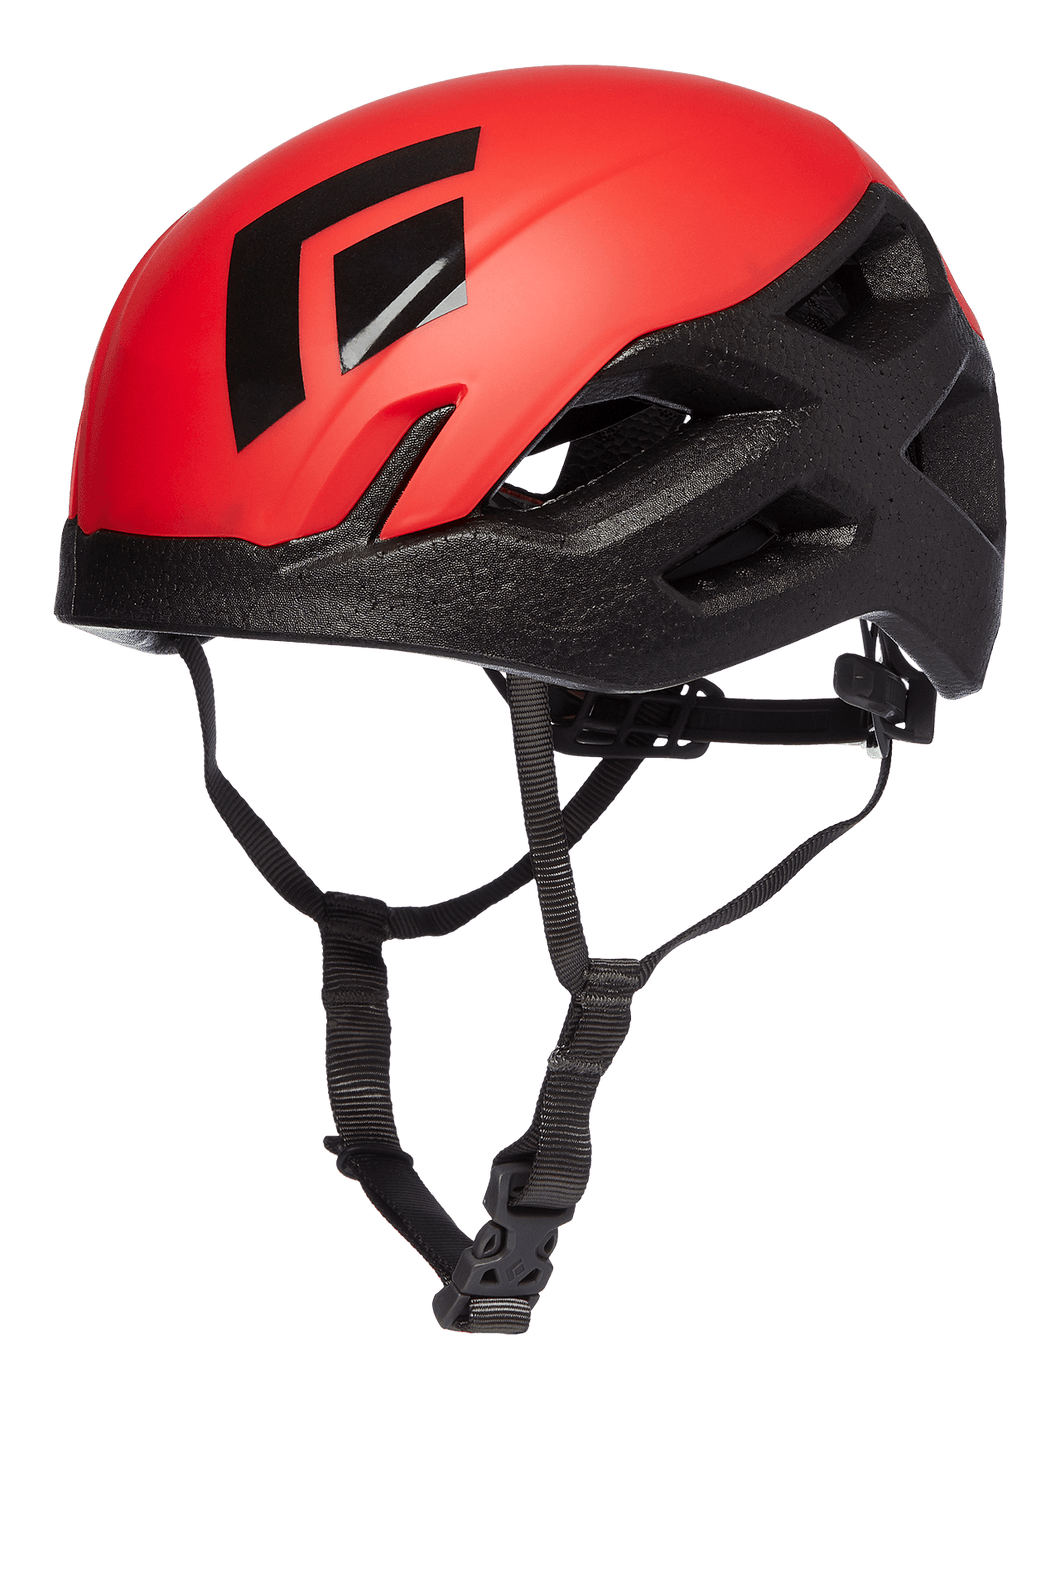 Black Diamond - Vision - Helmet - Rock Climbing - Safety - Trad - Sport - Top Rope